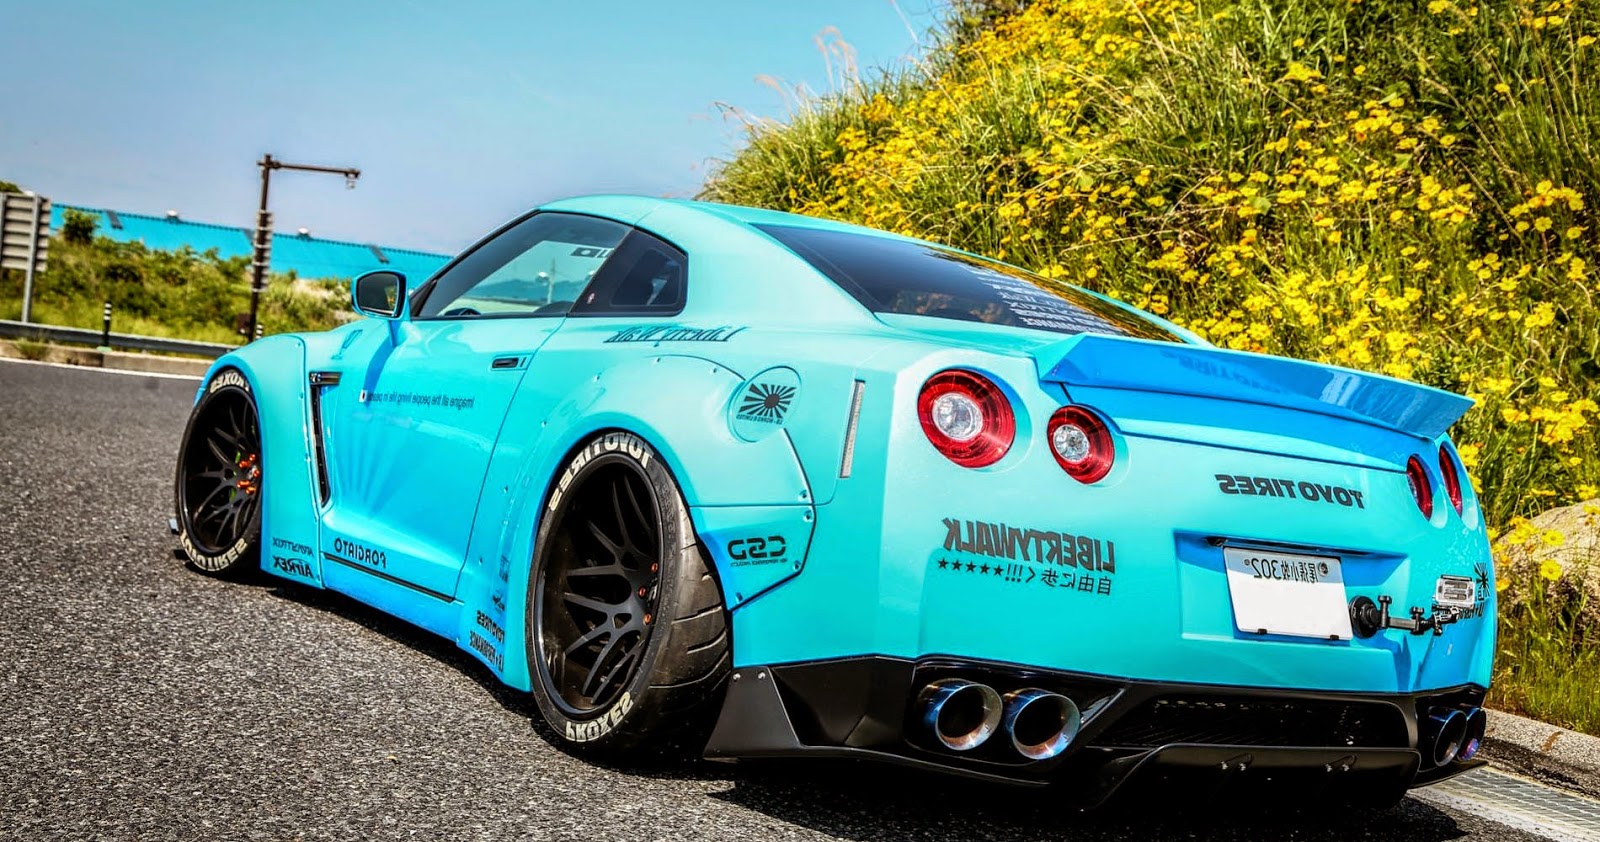 Nissan GT-R Modified Bright Blue - Concept Sport Car Design